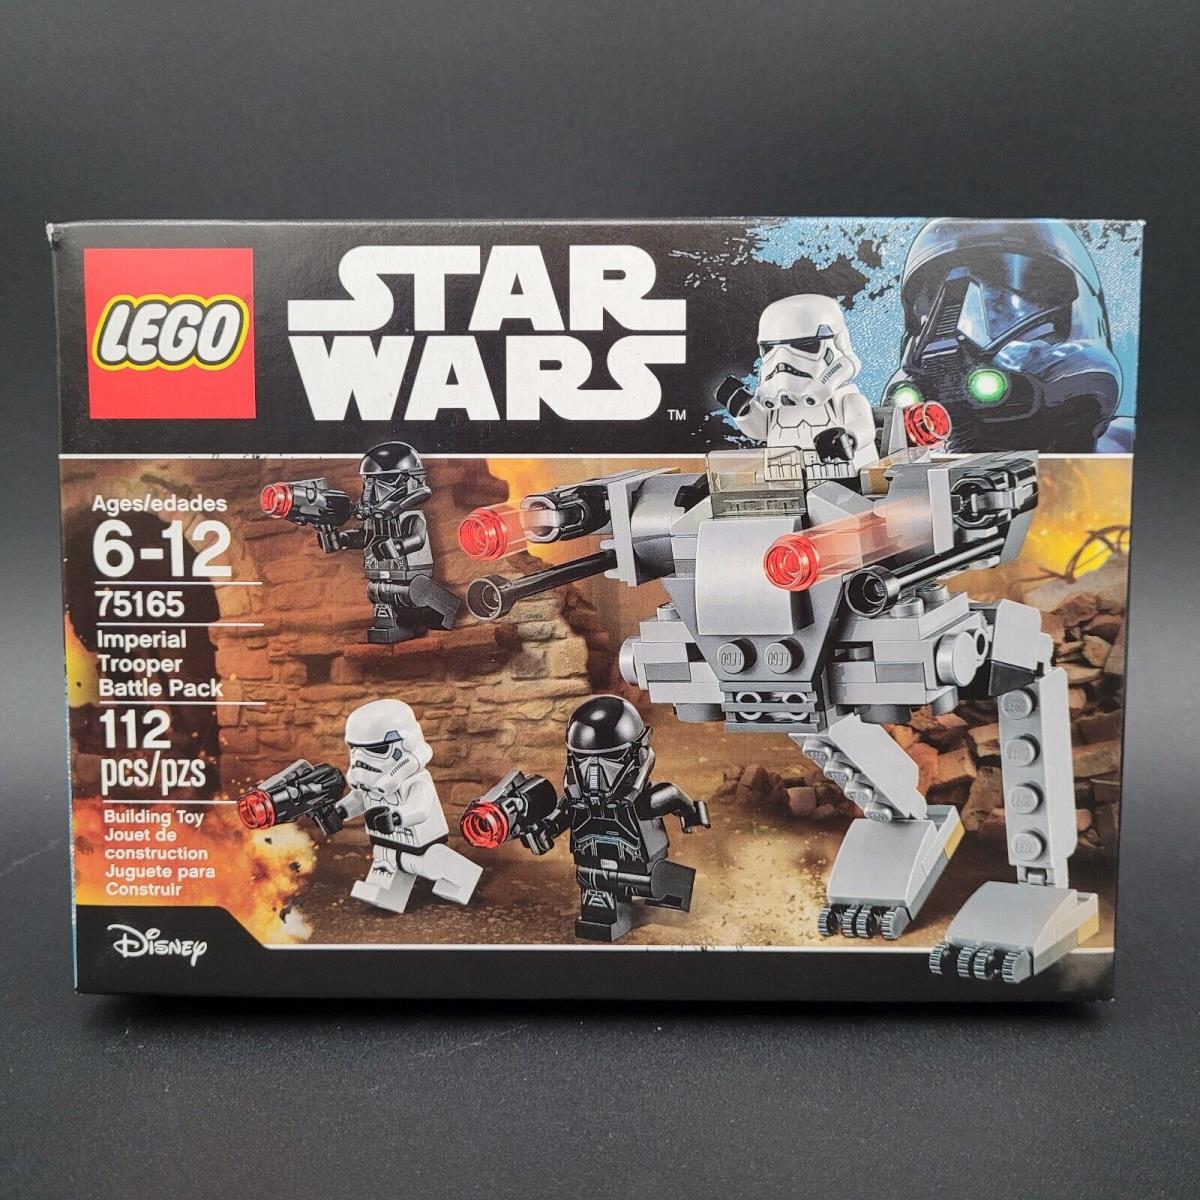 Lego Star Wars 75165 Imperial Trooper Battle Pack - - Retired